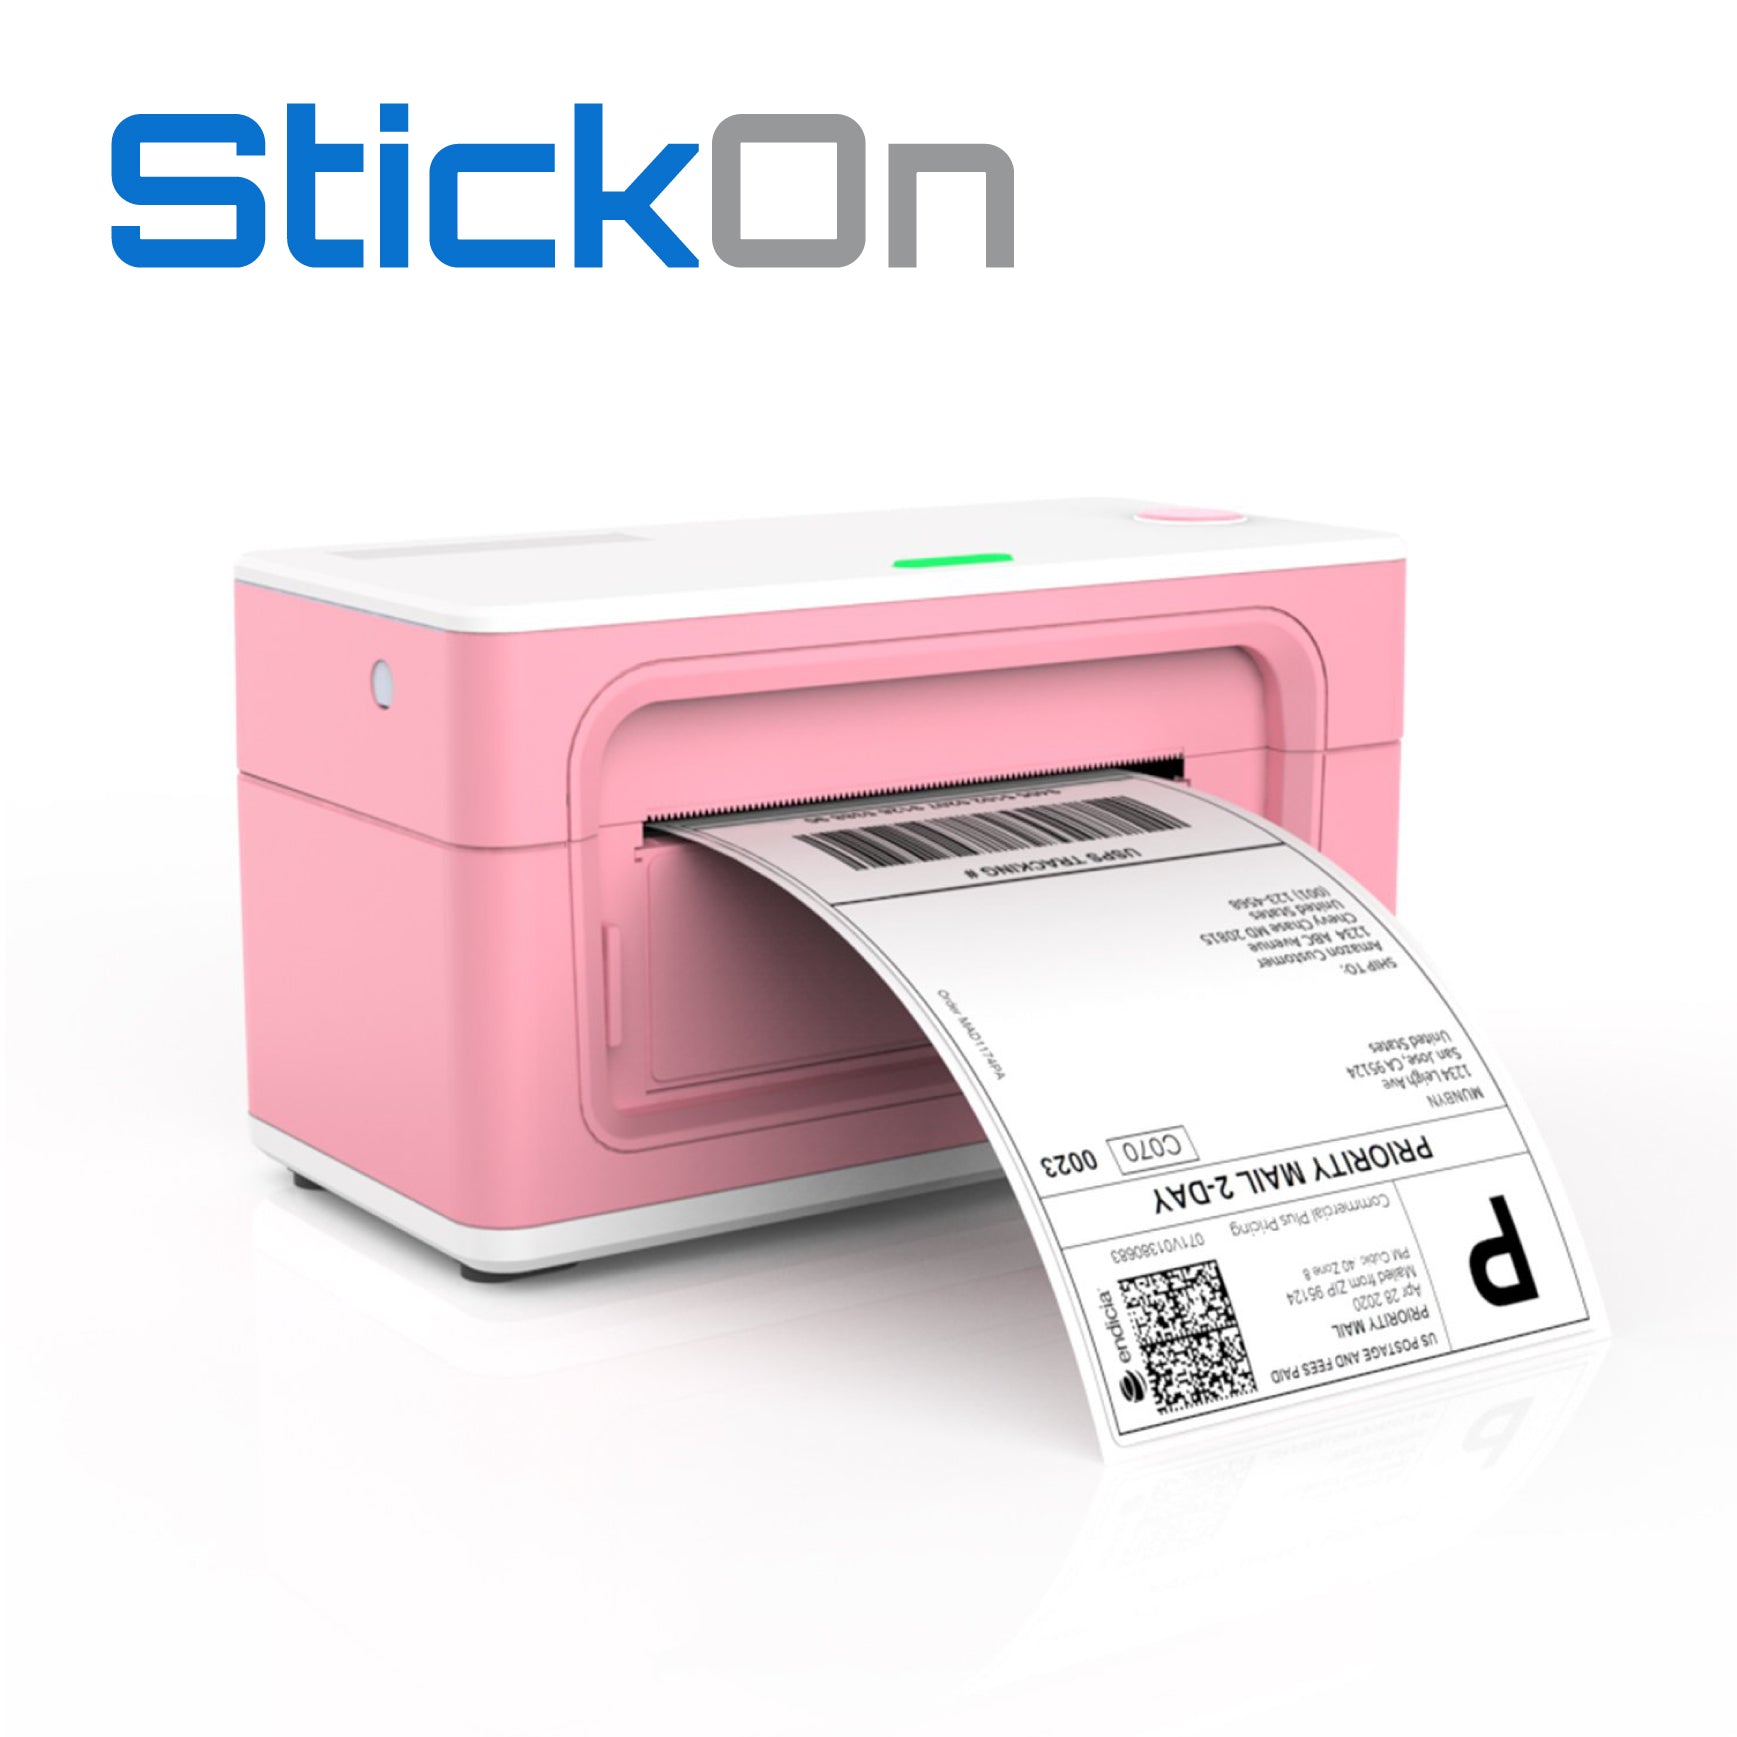  MUNBYN Pink Shipping Label Printer, [Upgraded 2.0